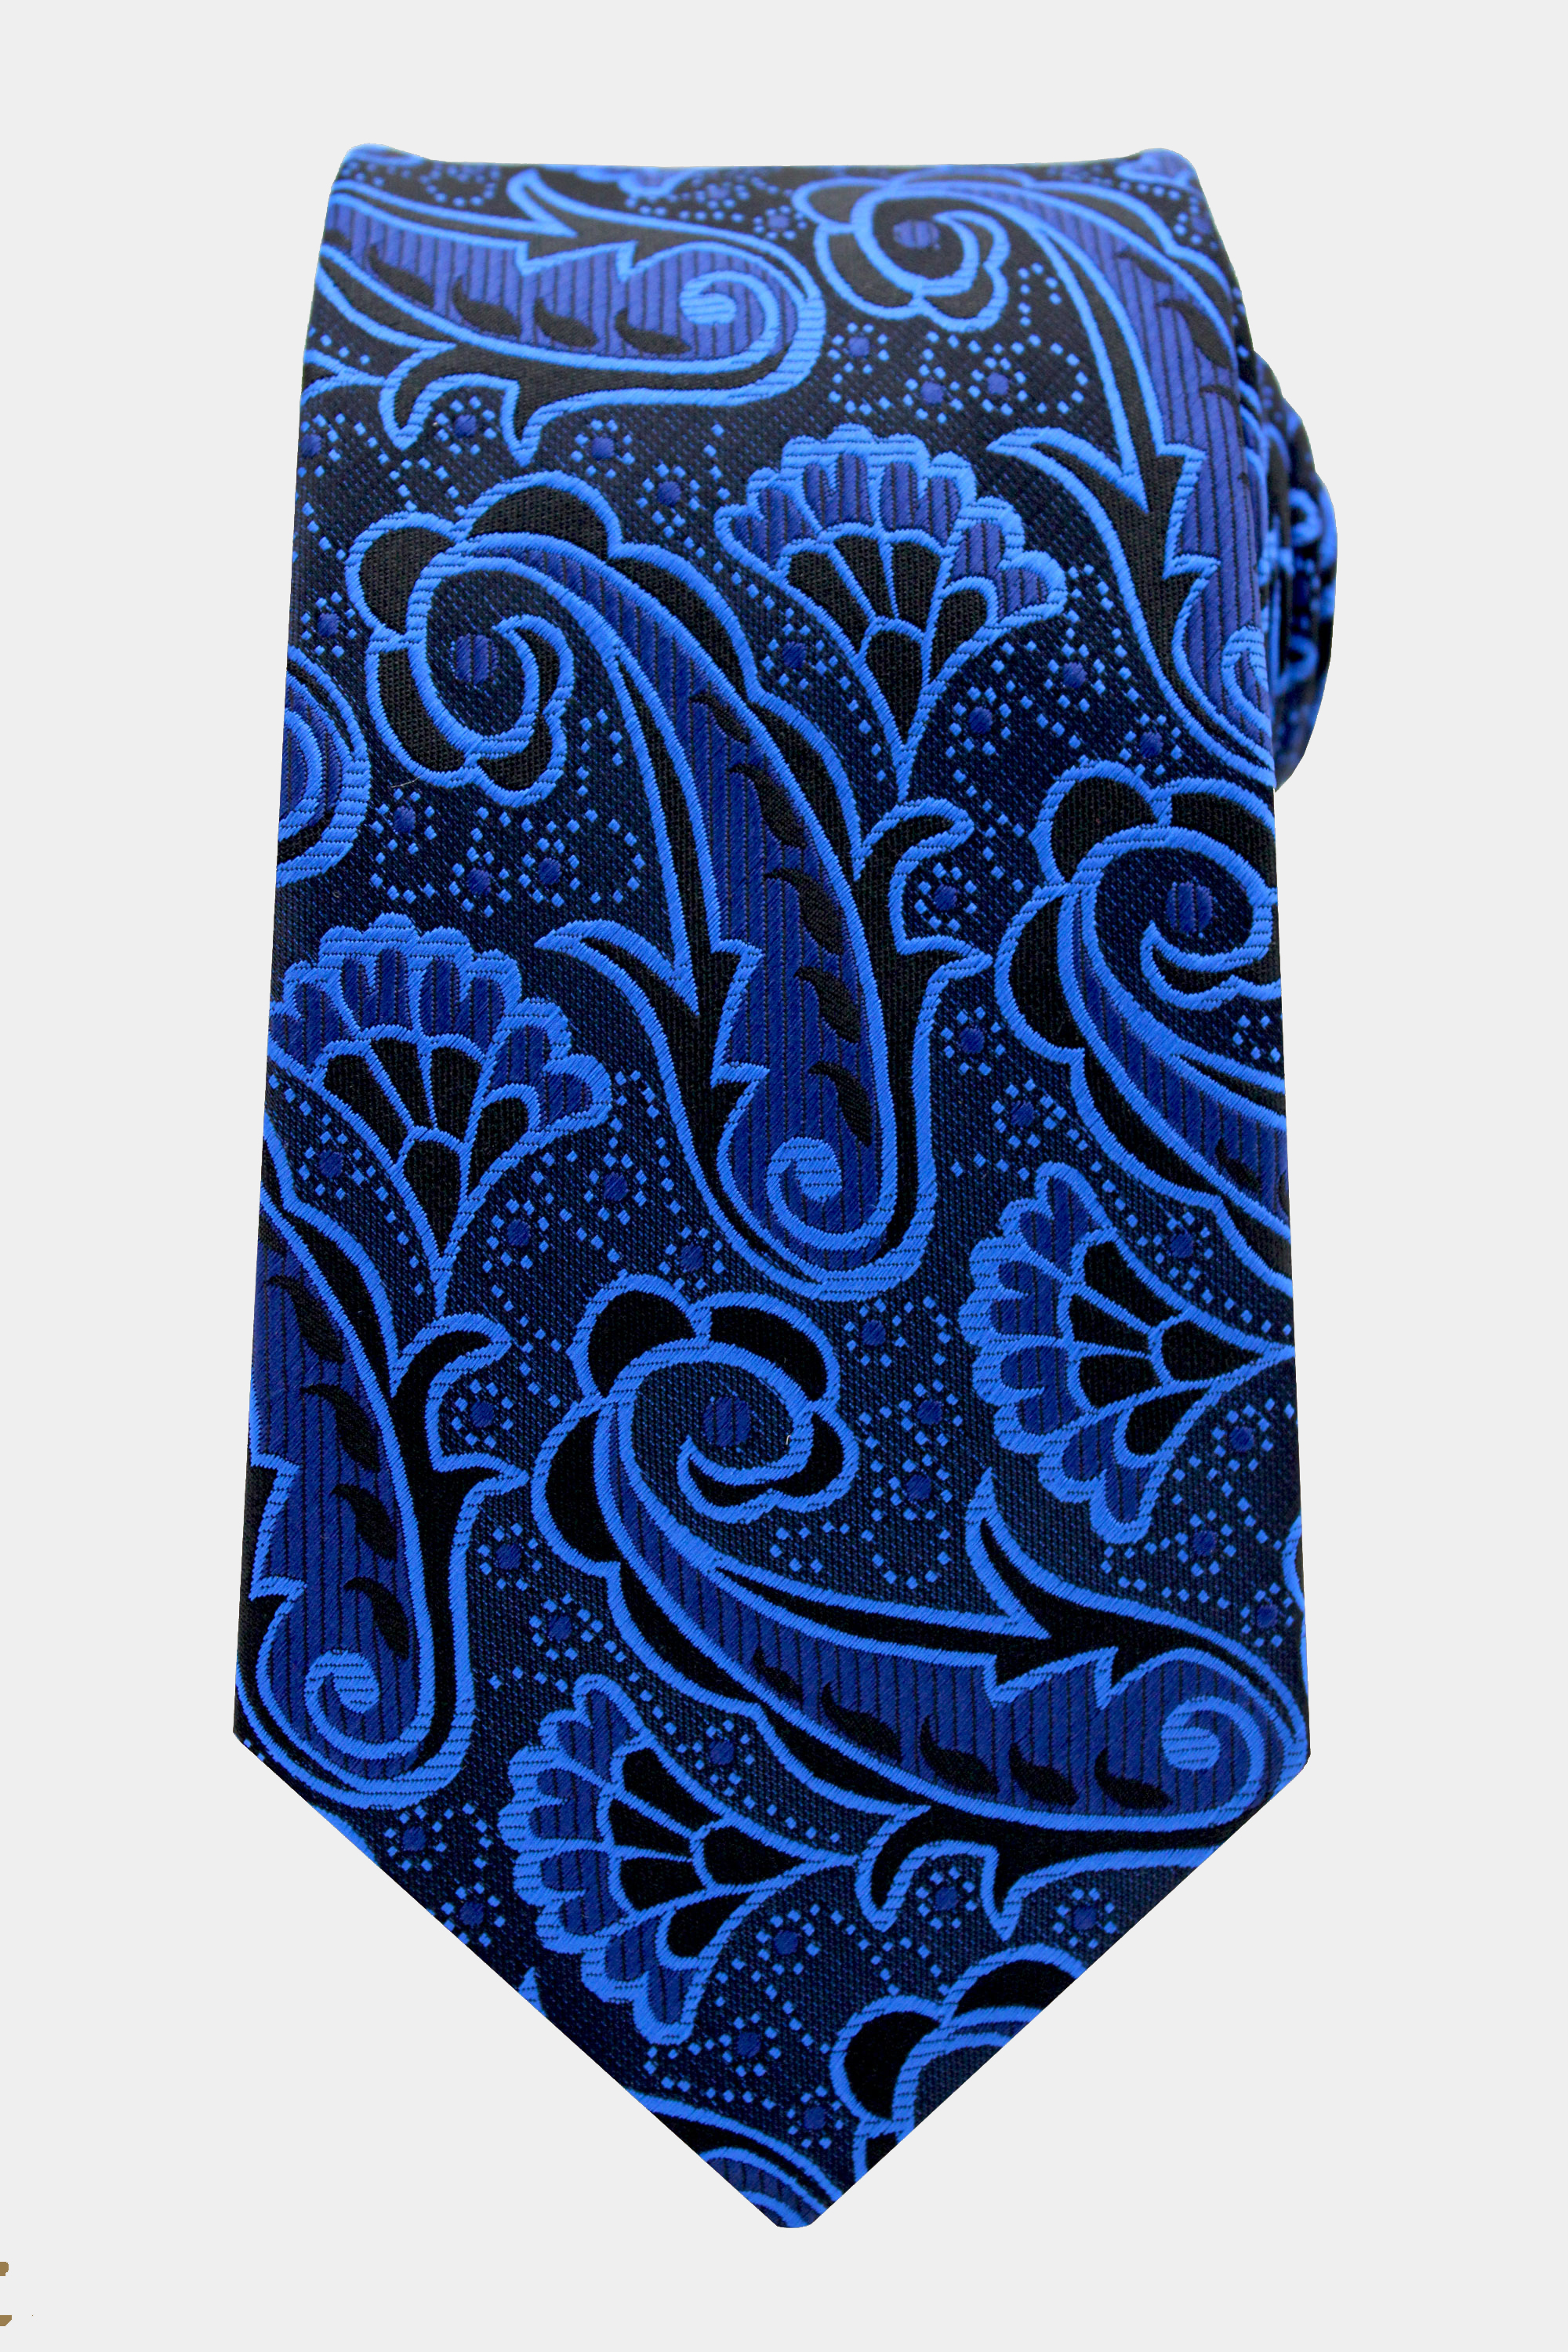 Royal-Blue-and-Black-Paisley-Tie-from-Genbtlemansguru.com_